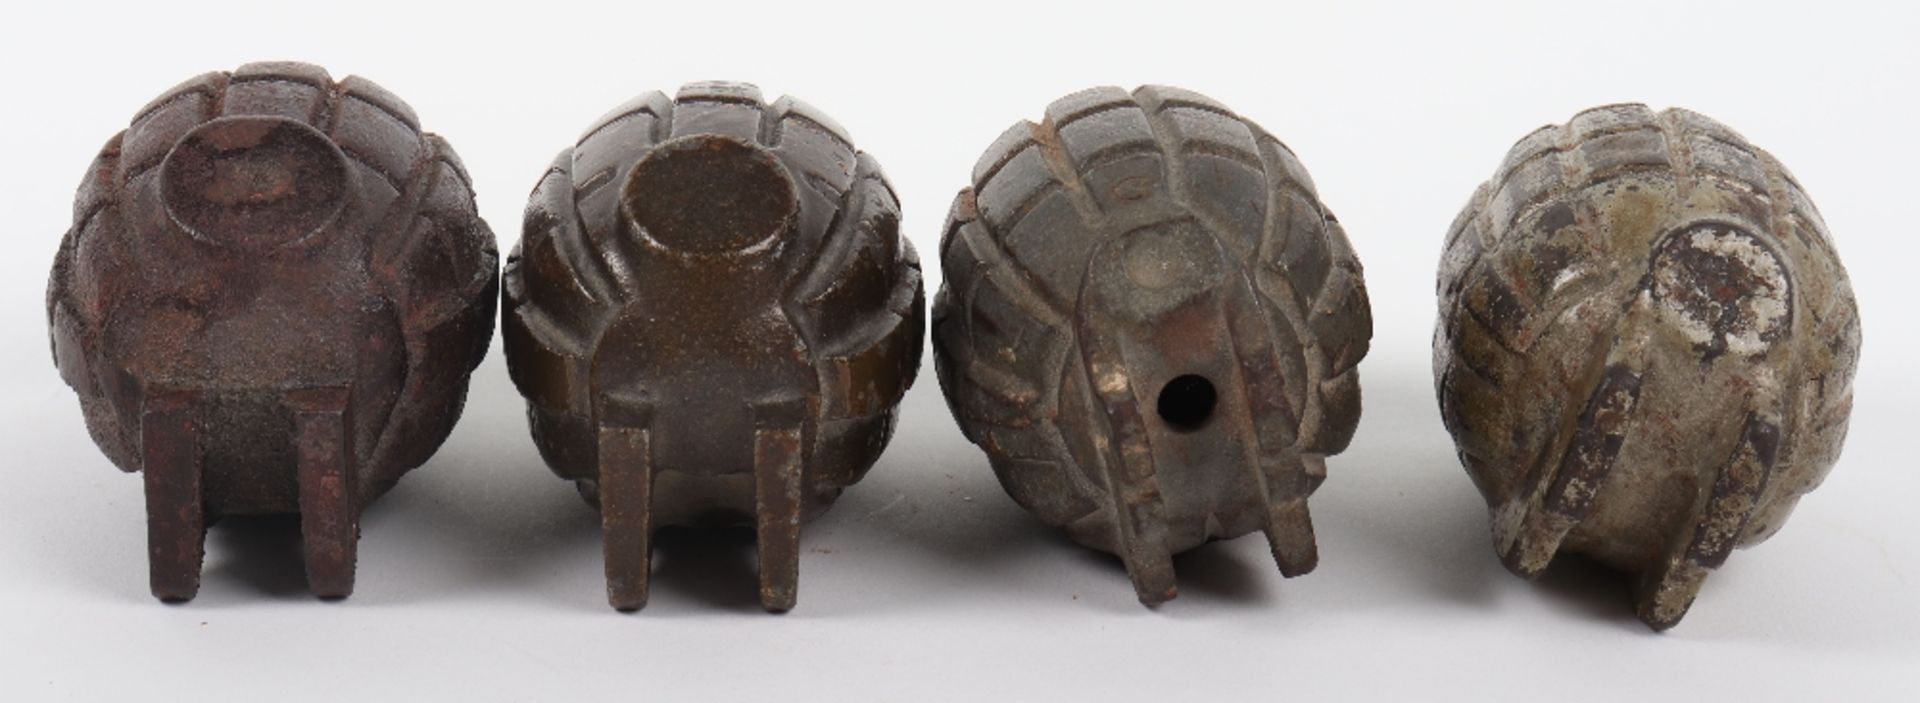 4x Inert British Mills Grenade Bodies - Image 3 of 4